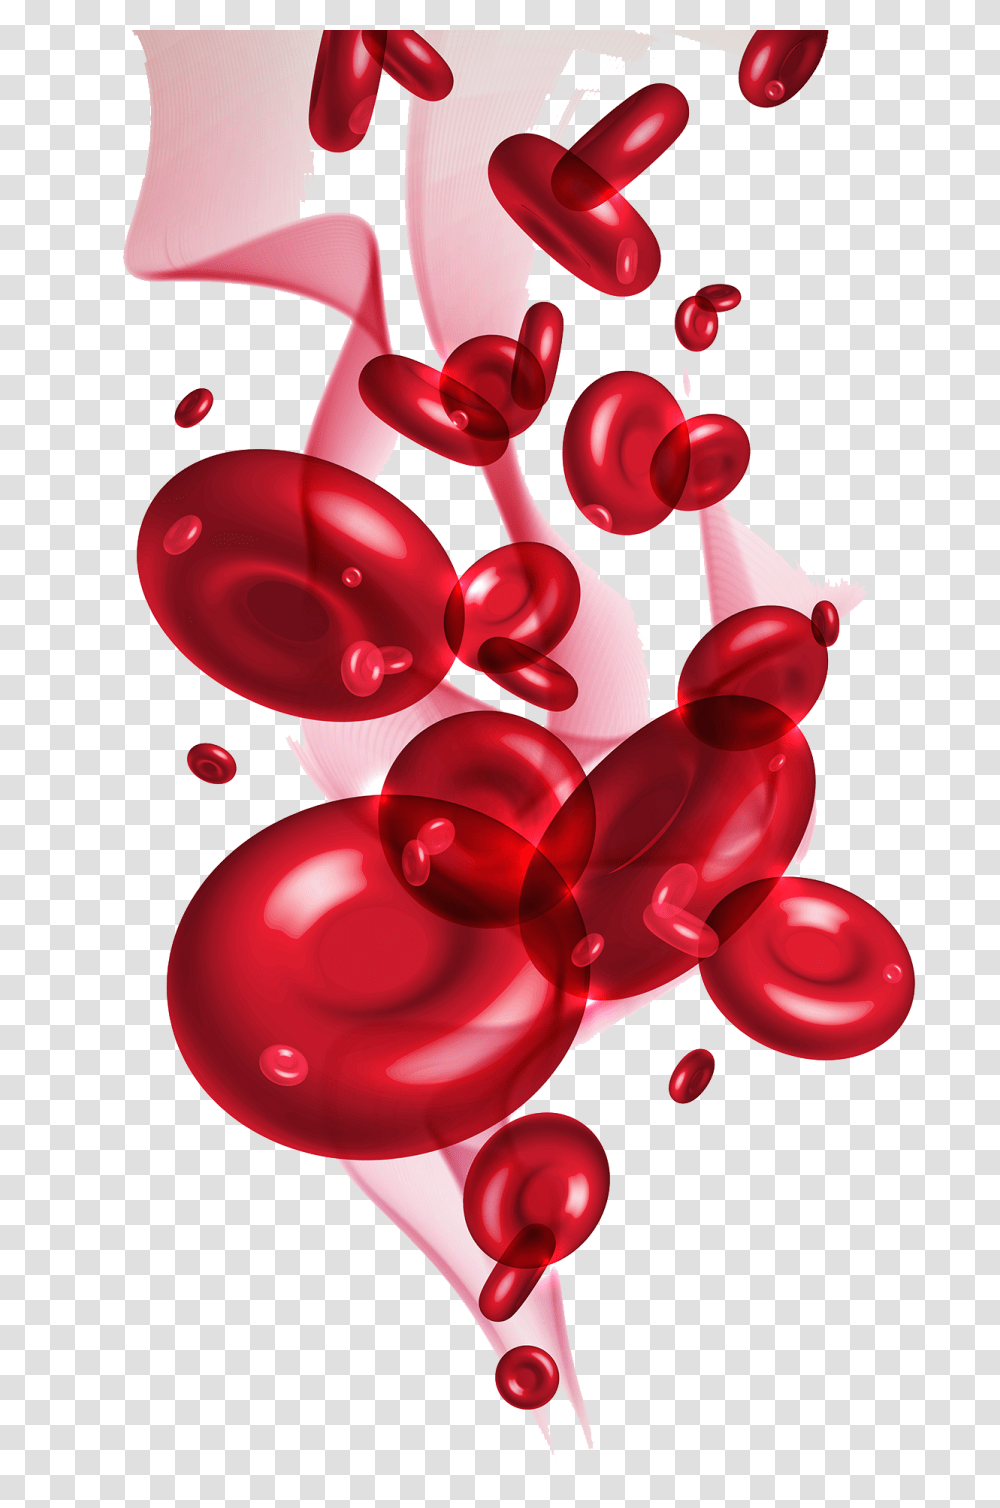 Blood Pool Red Blood Cells, Plant, Heart, Fruit, Food Transparent Png